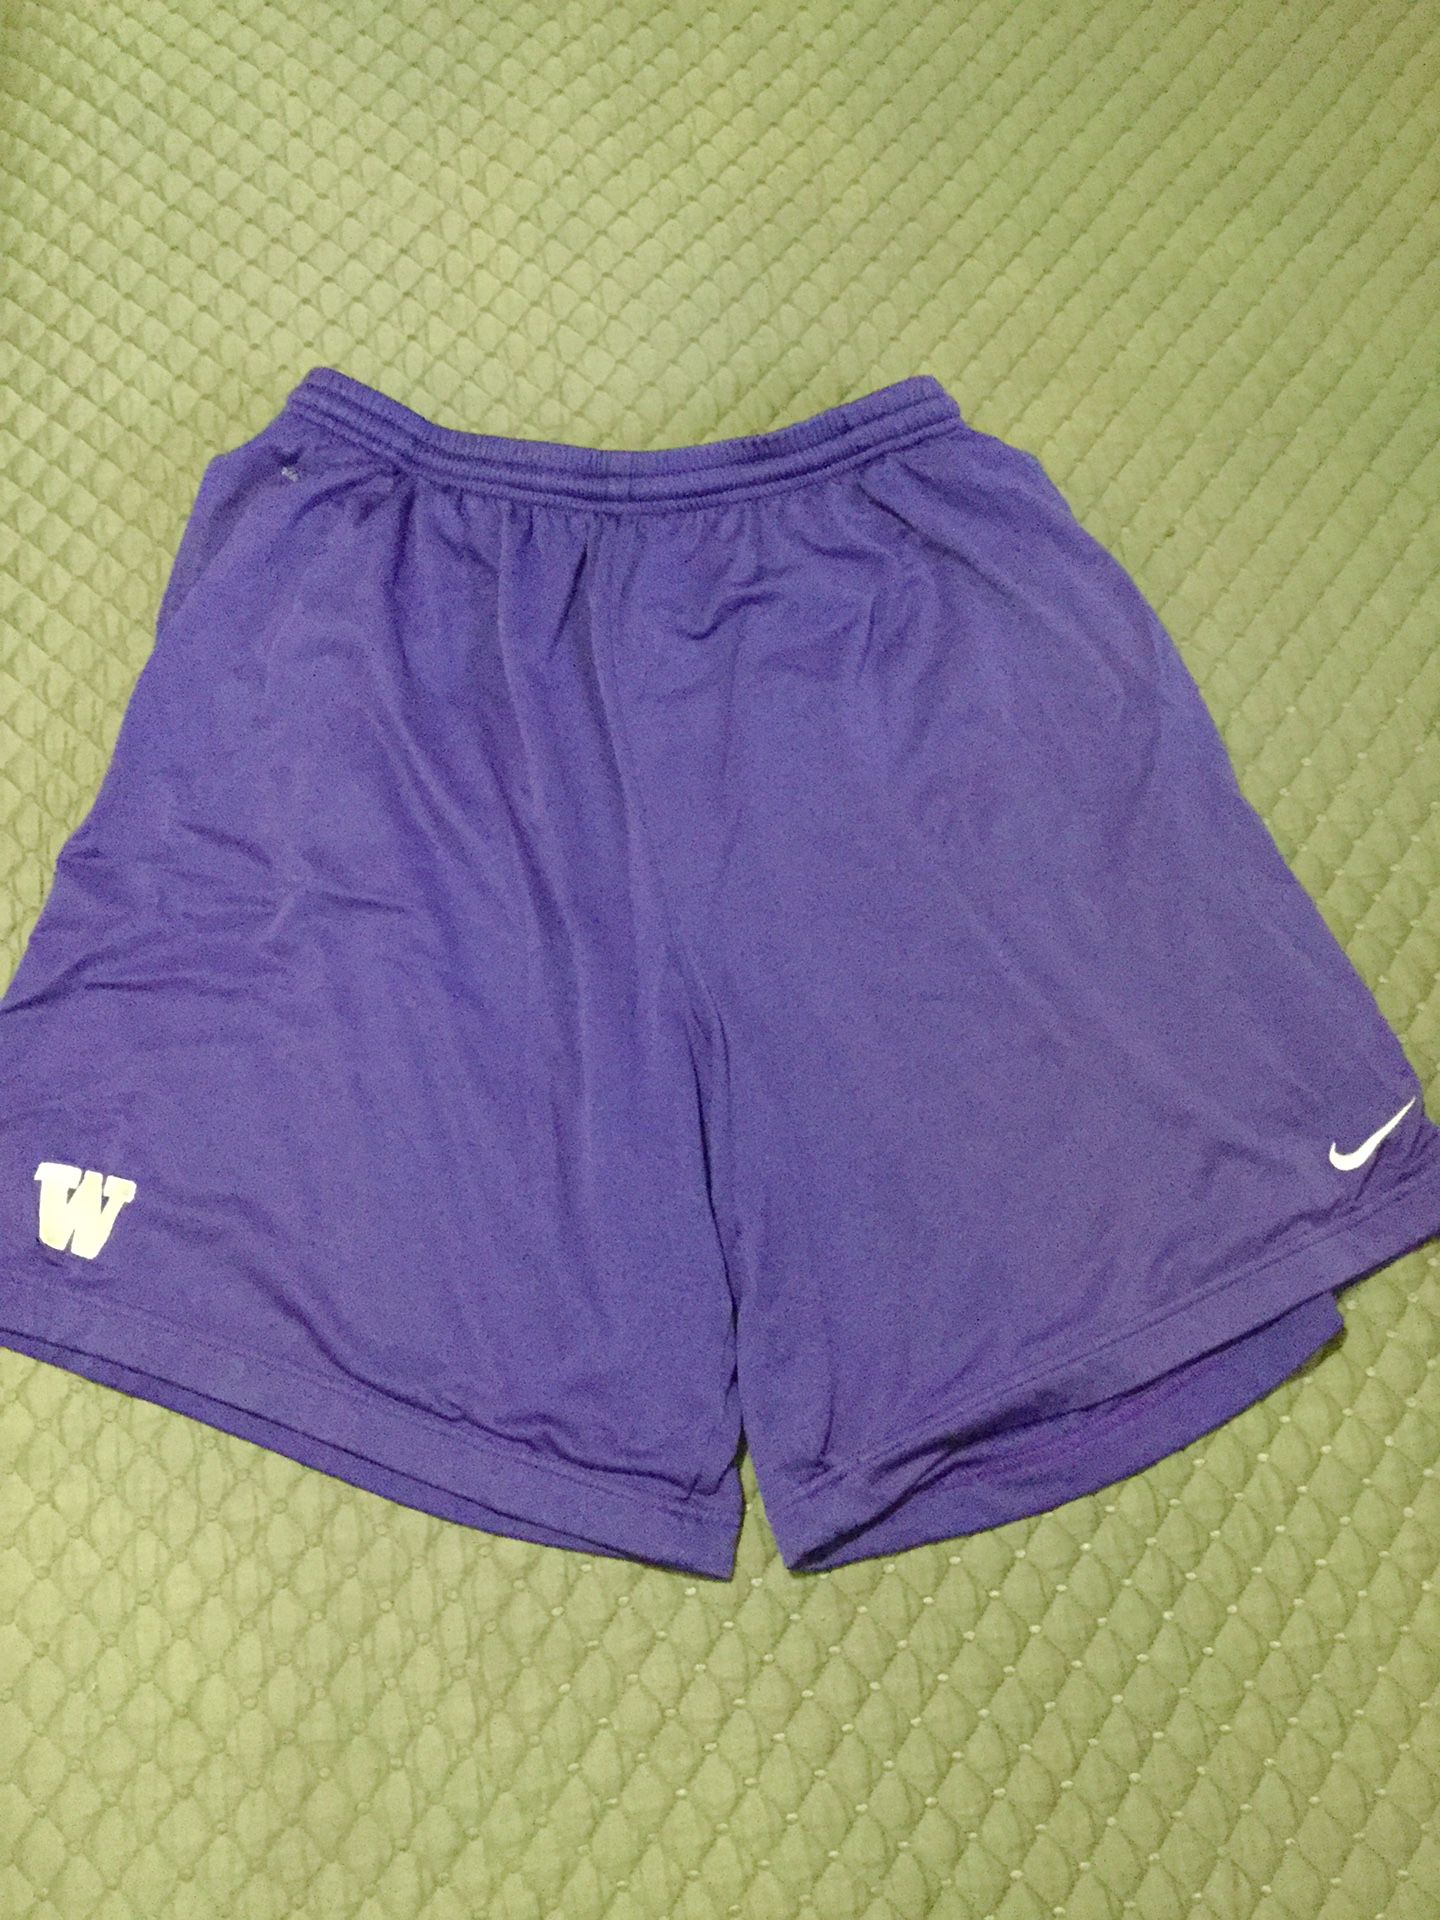 UW Nike Team basketball shorts